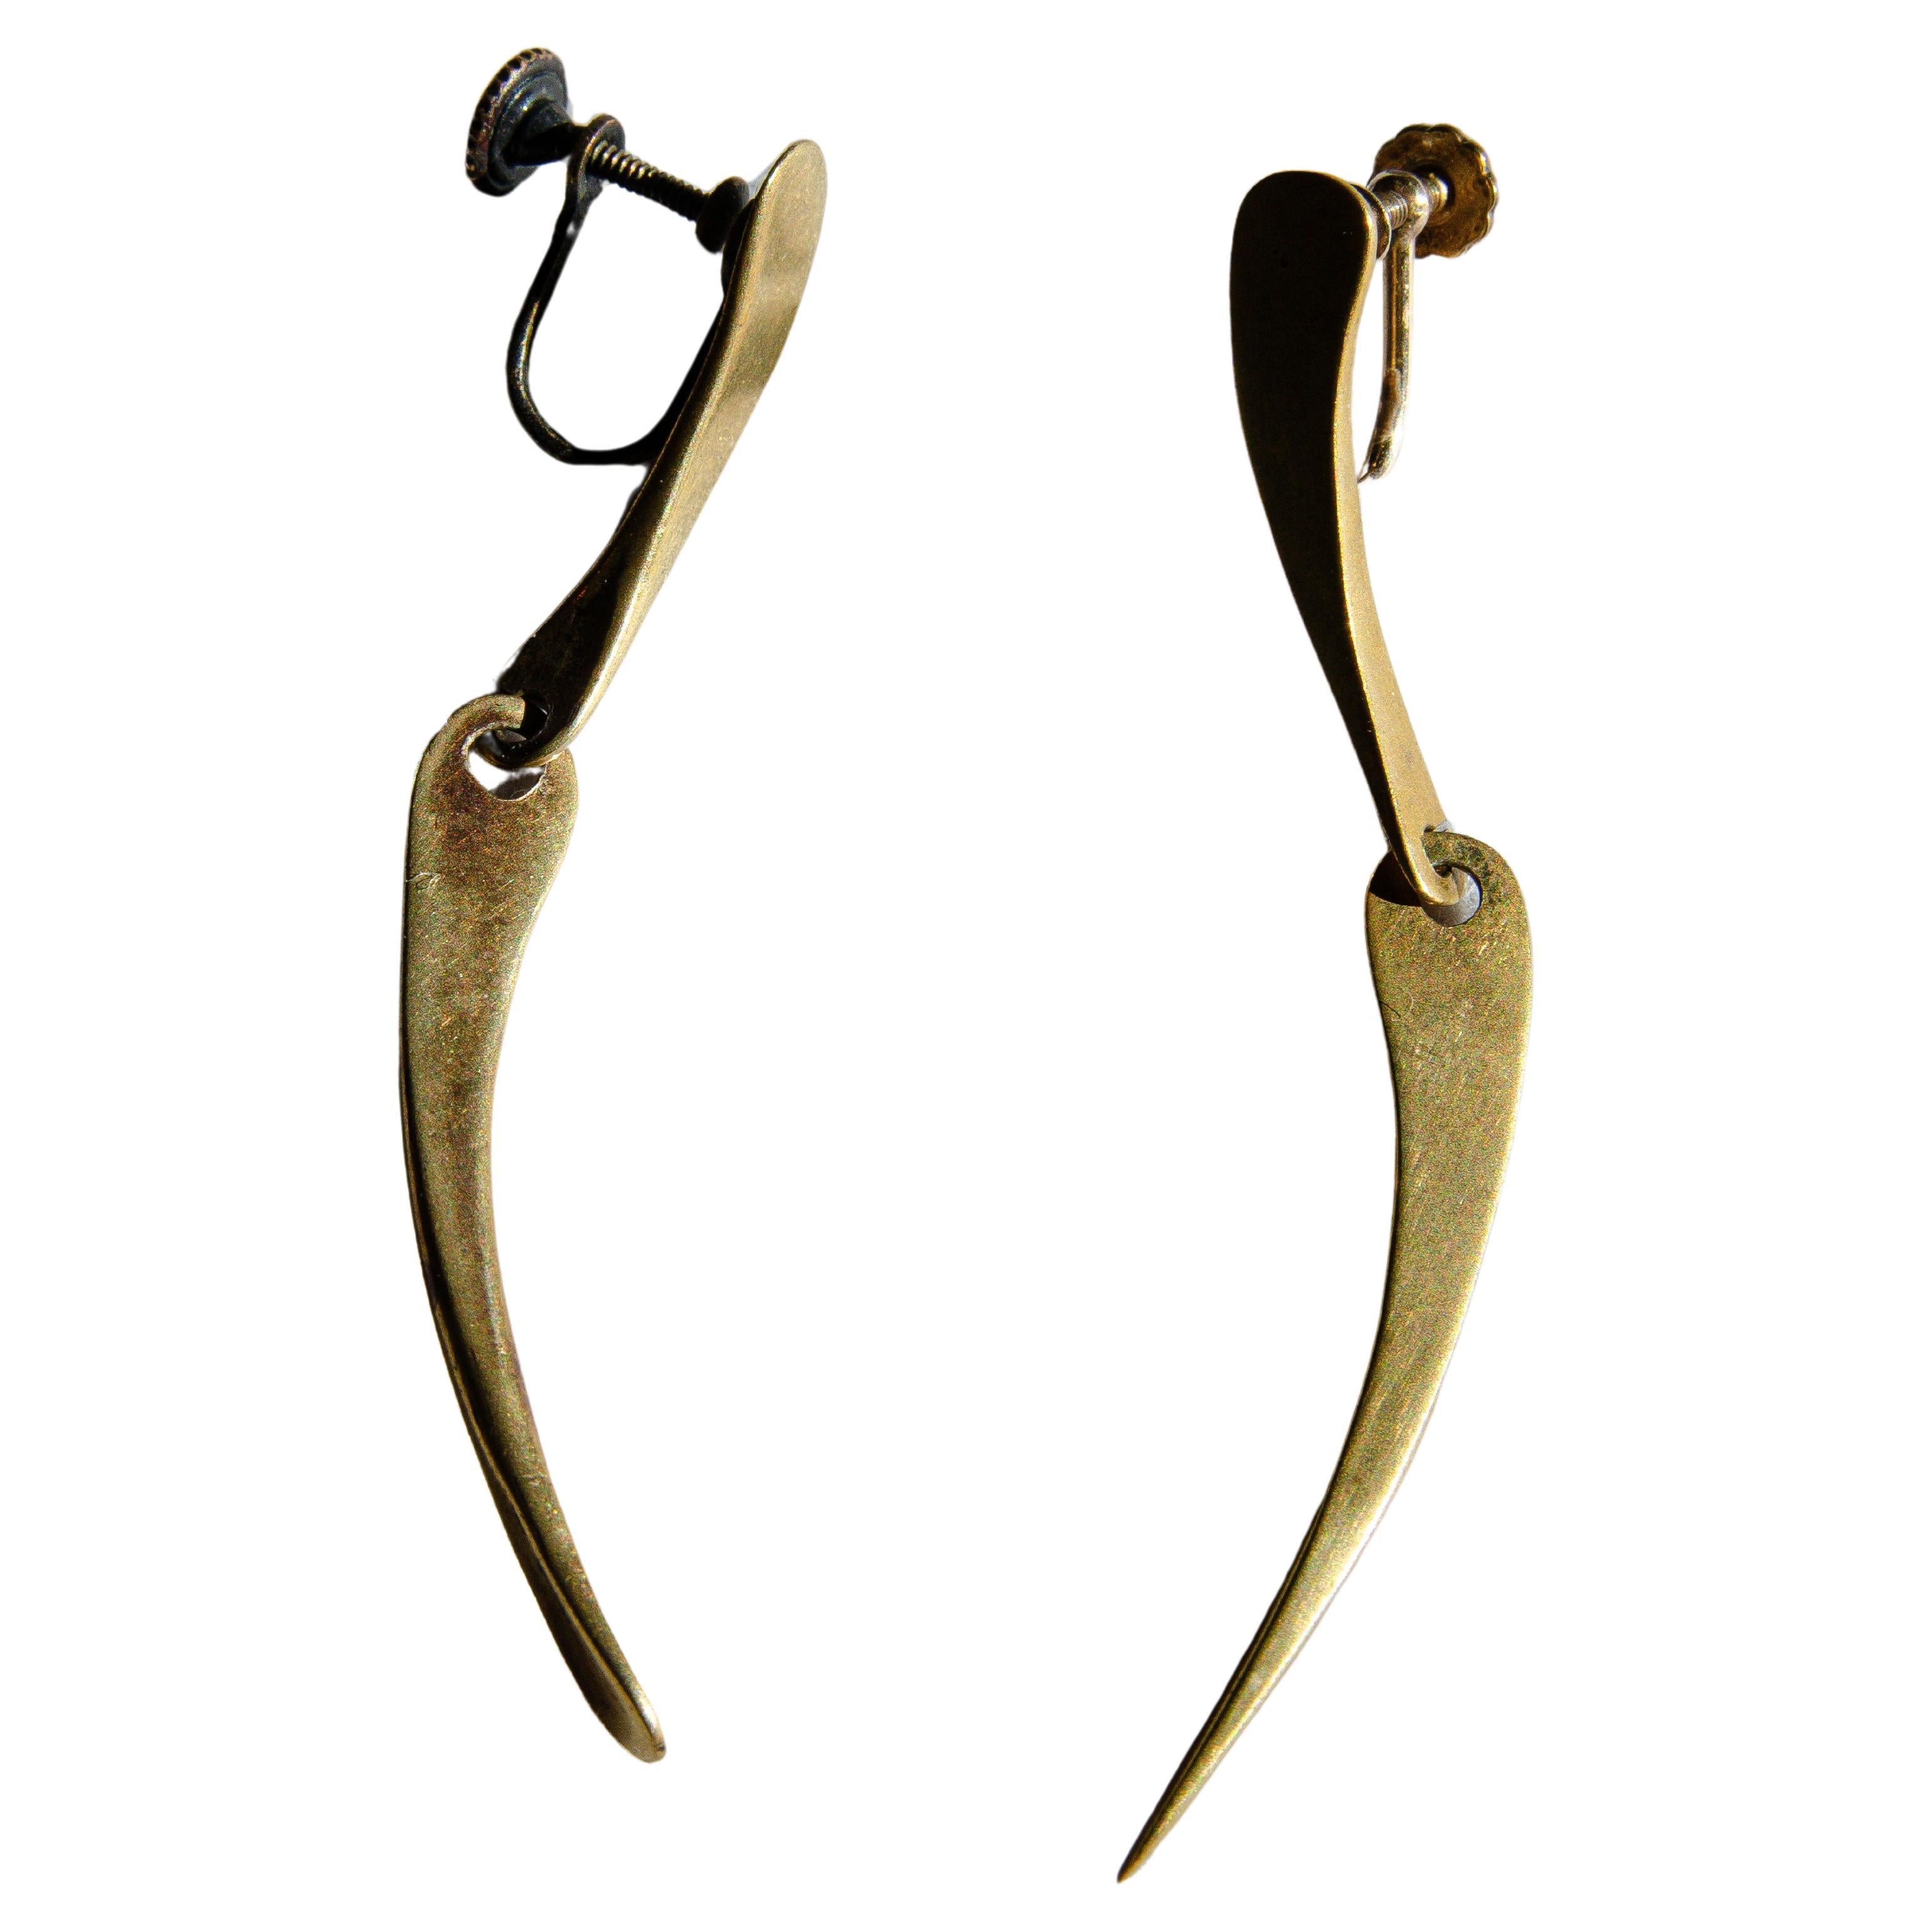 Unusual Vintage Mid-Century Modernist Brass Pendant Earrings By Art Smith